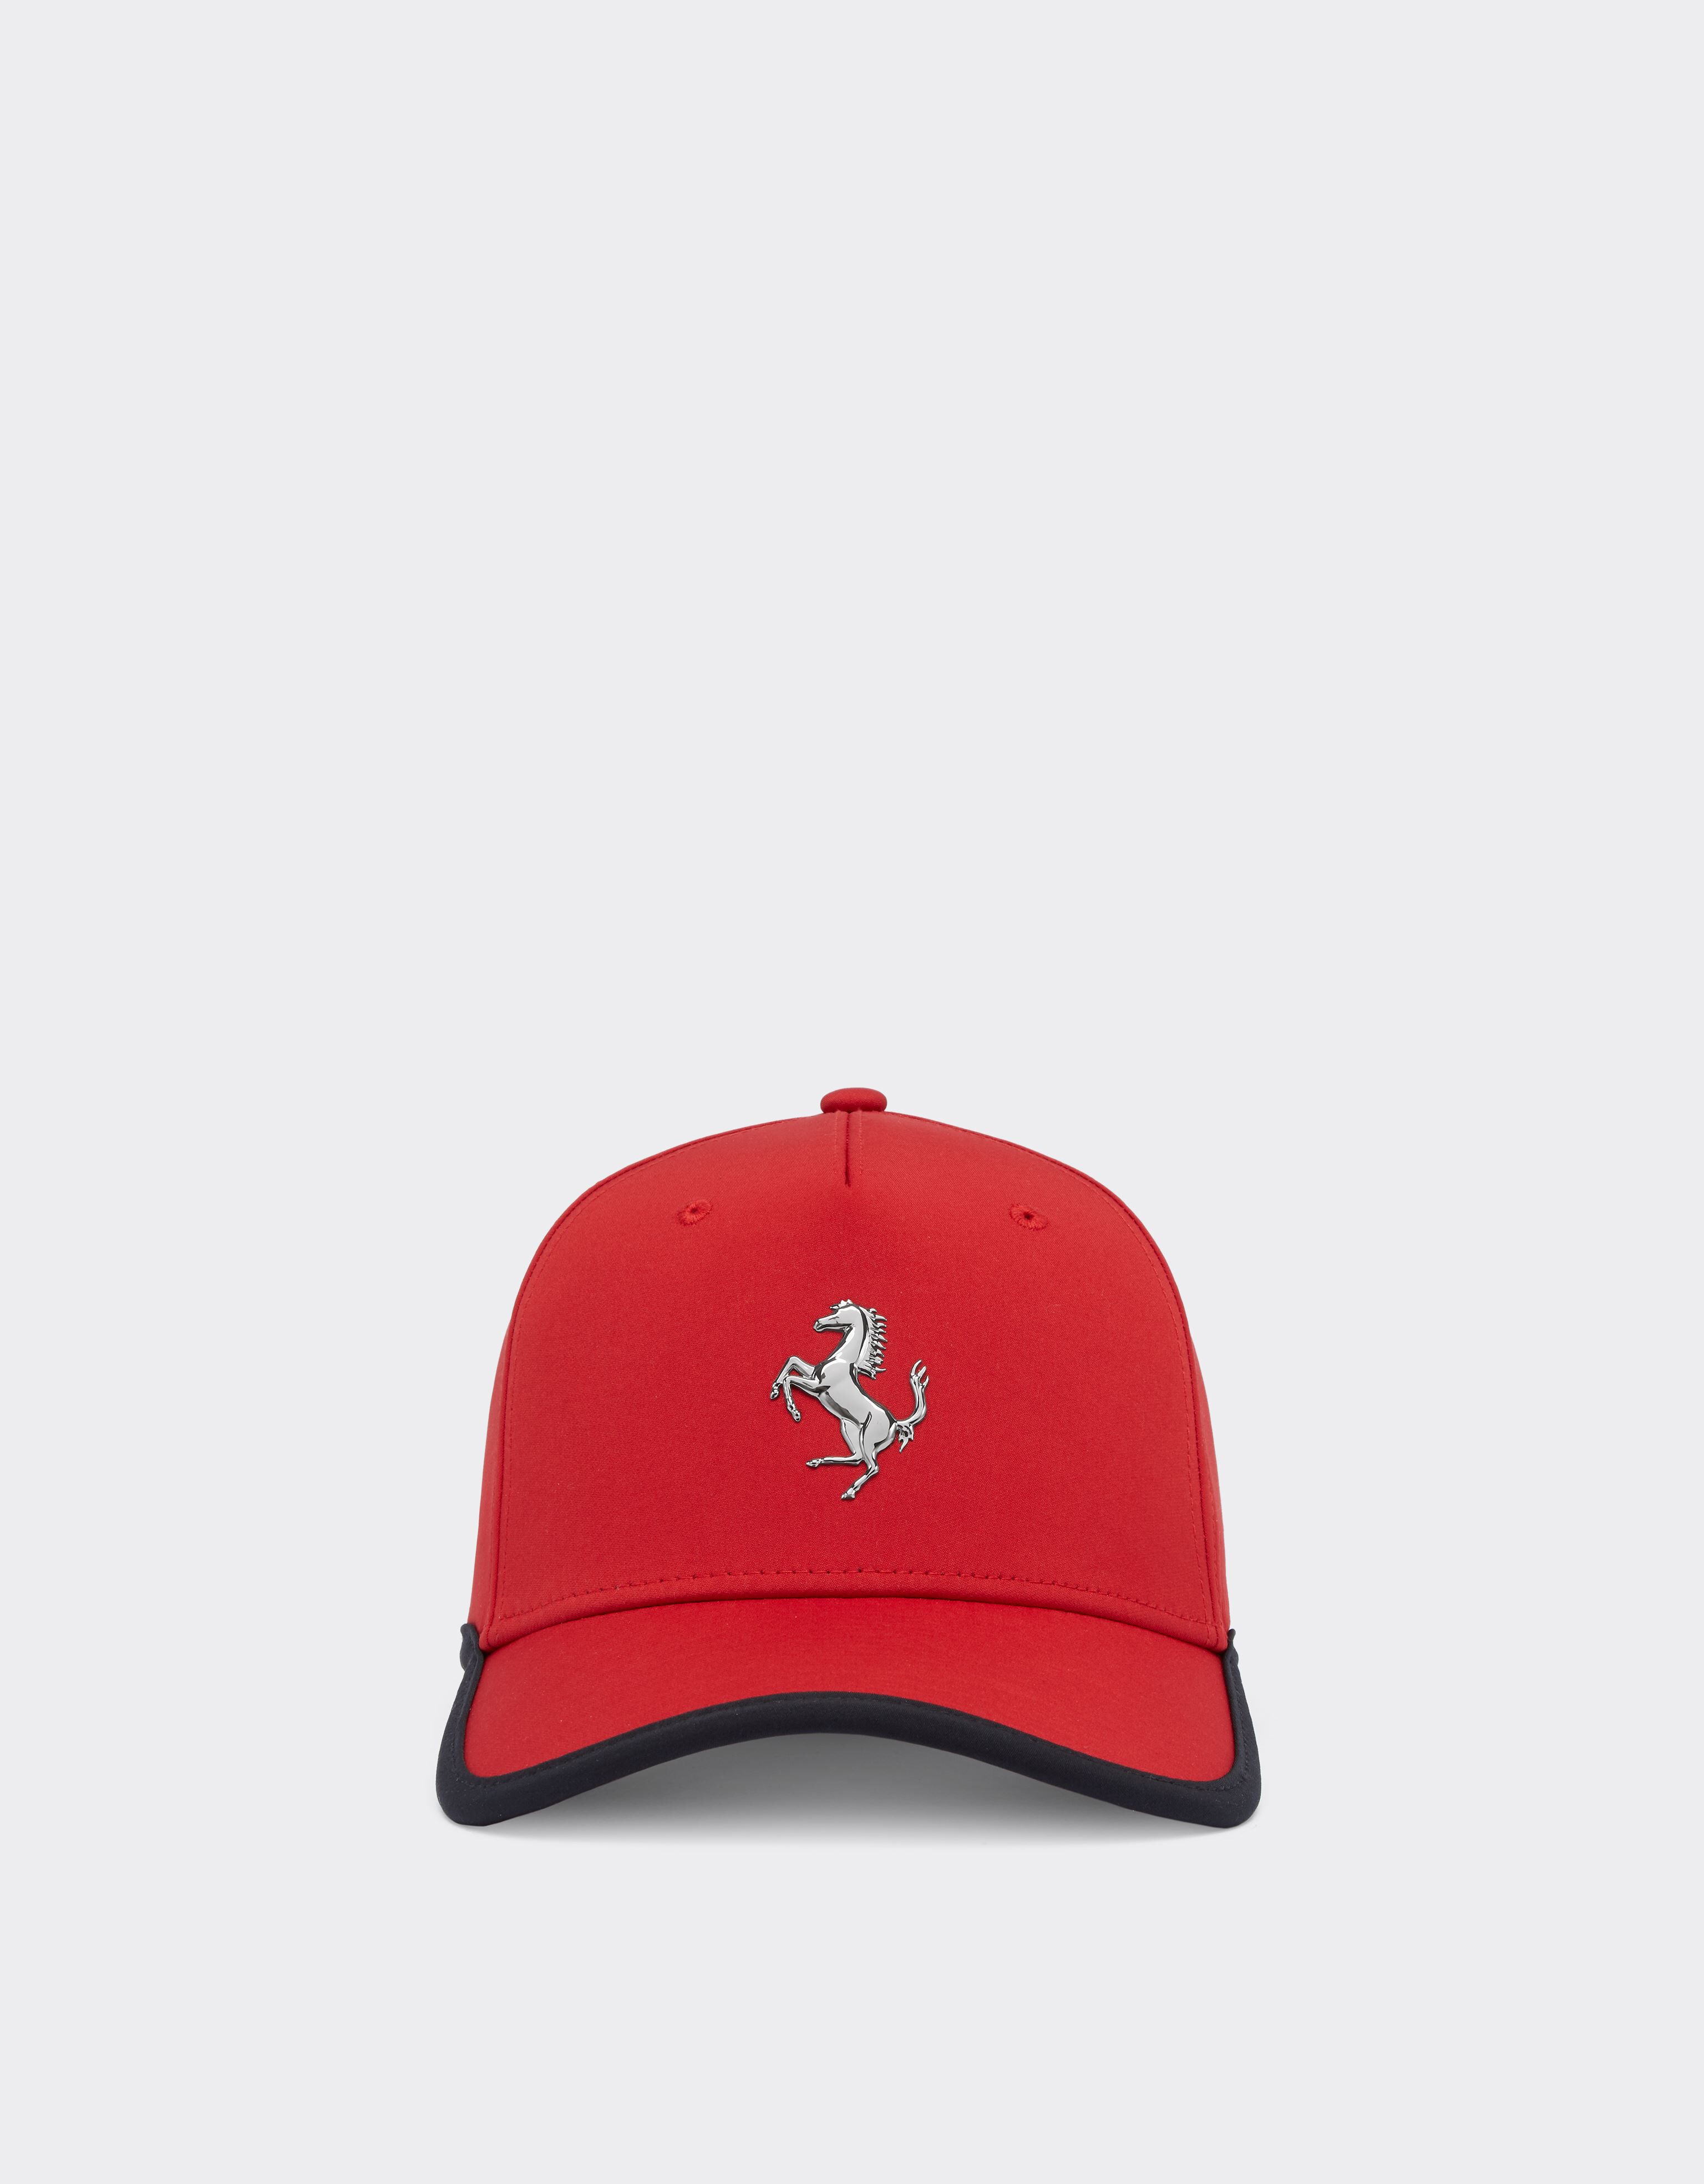 Ferrari Baseball cap with Prancing Horse detail Optical White 20815f